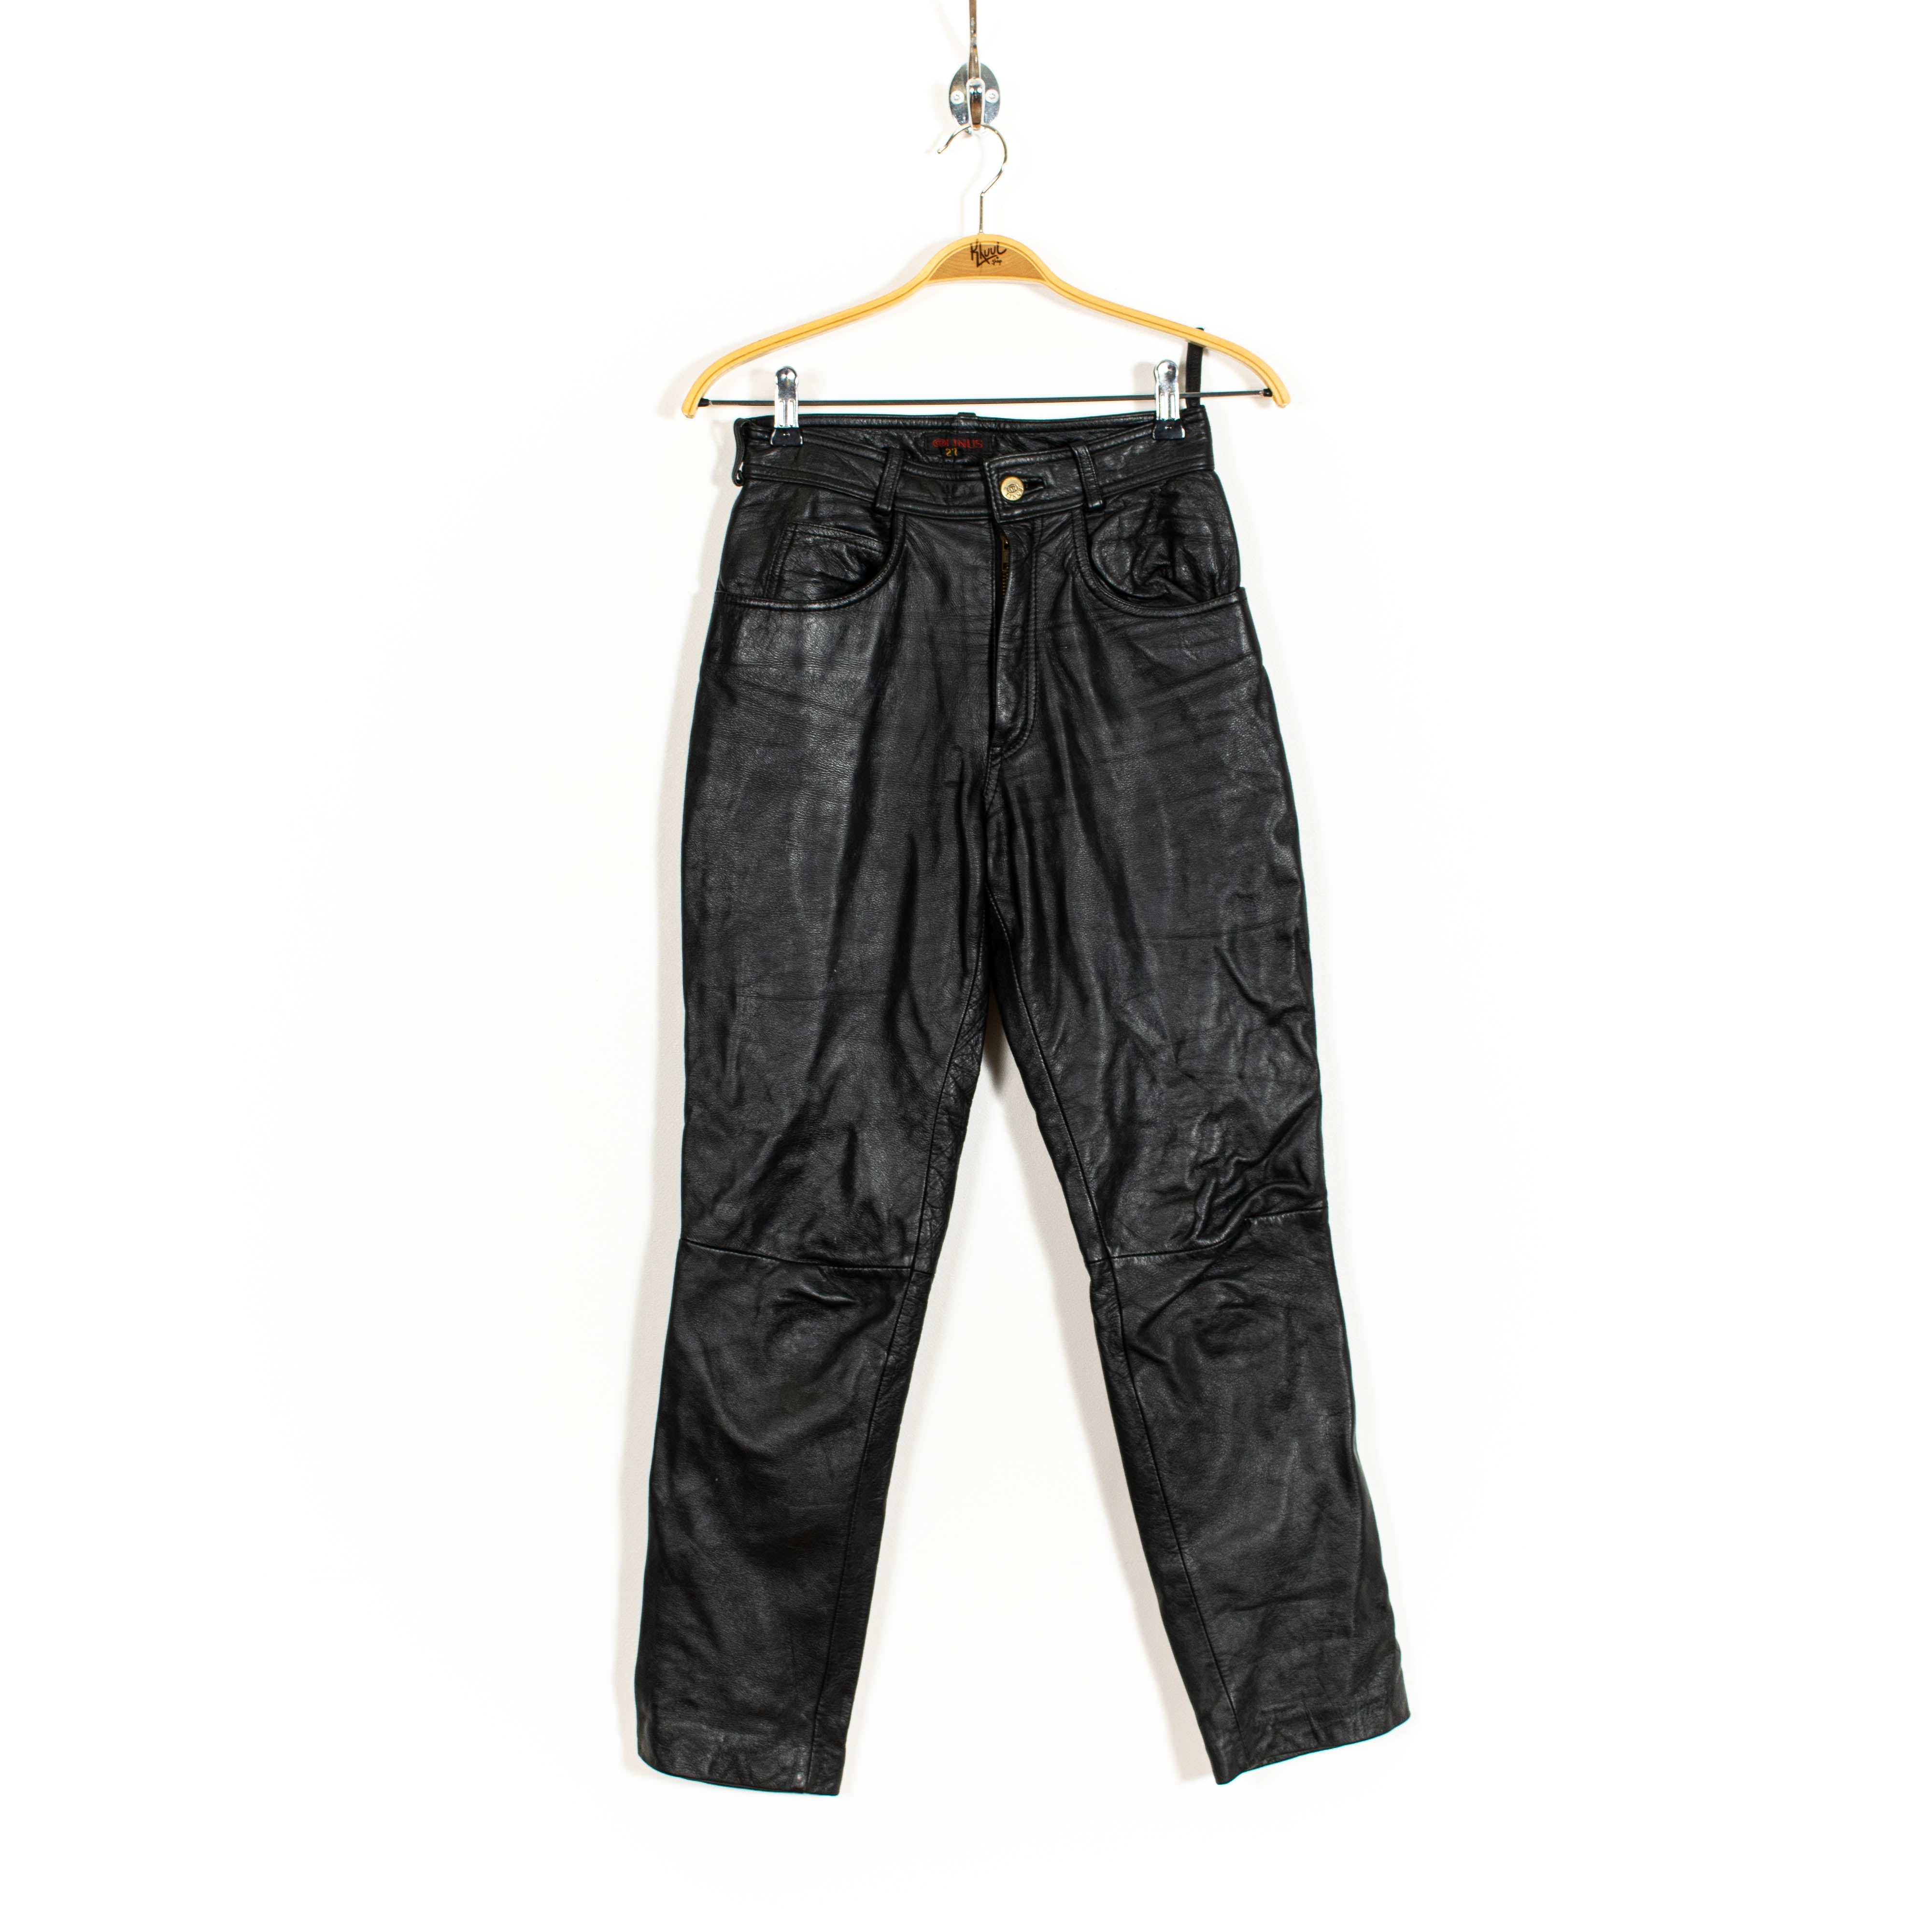 Linus Genuine Black Leather Carrot Fit Zip Up Pants Mens US26